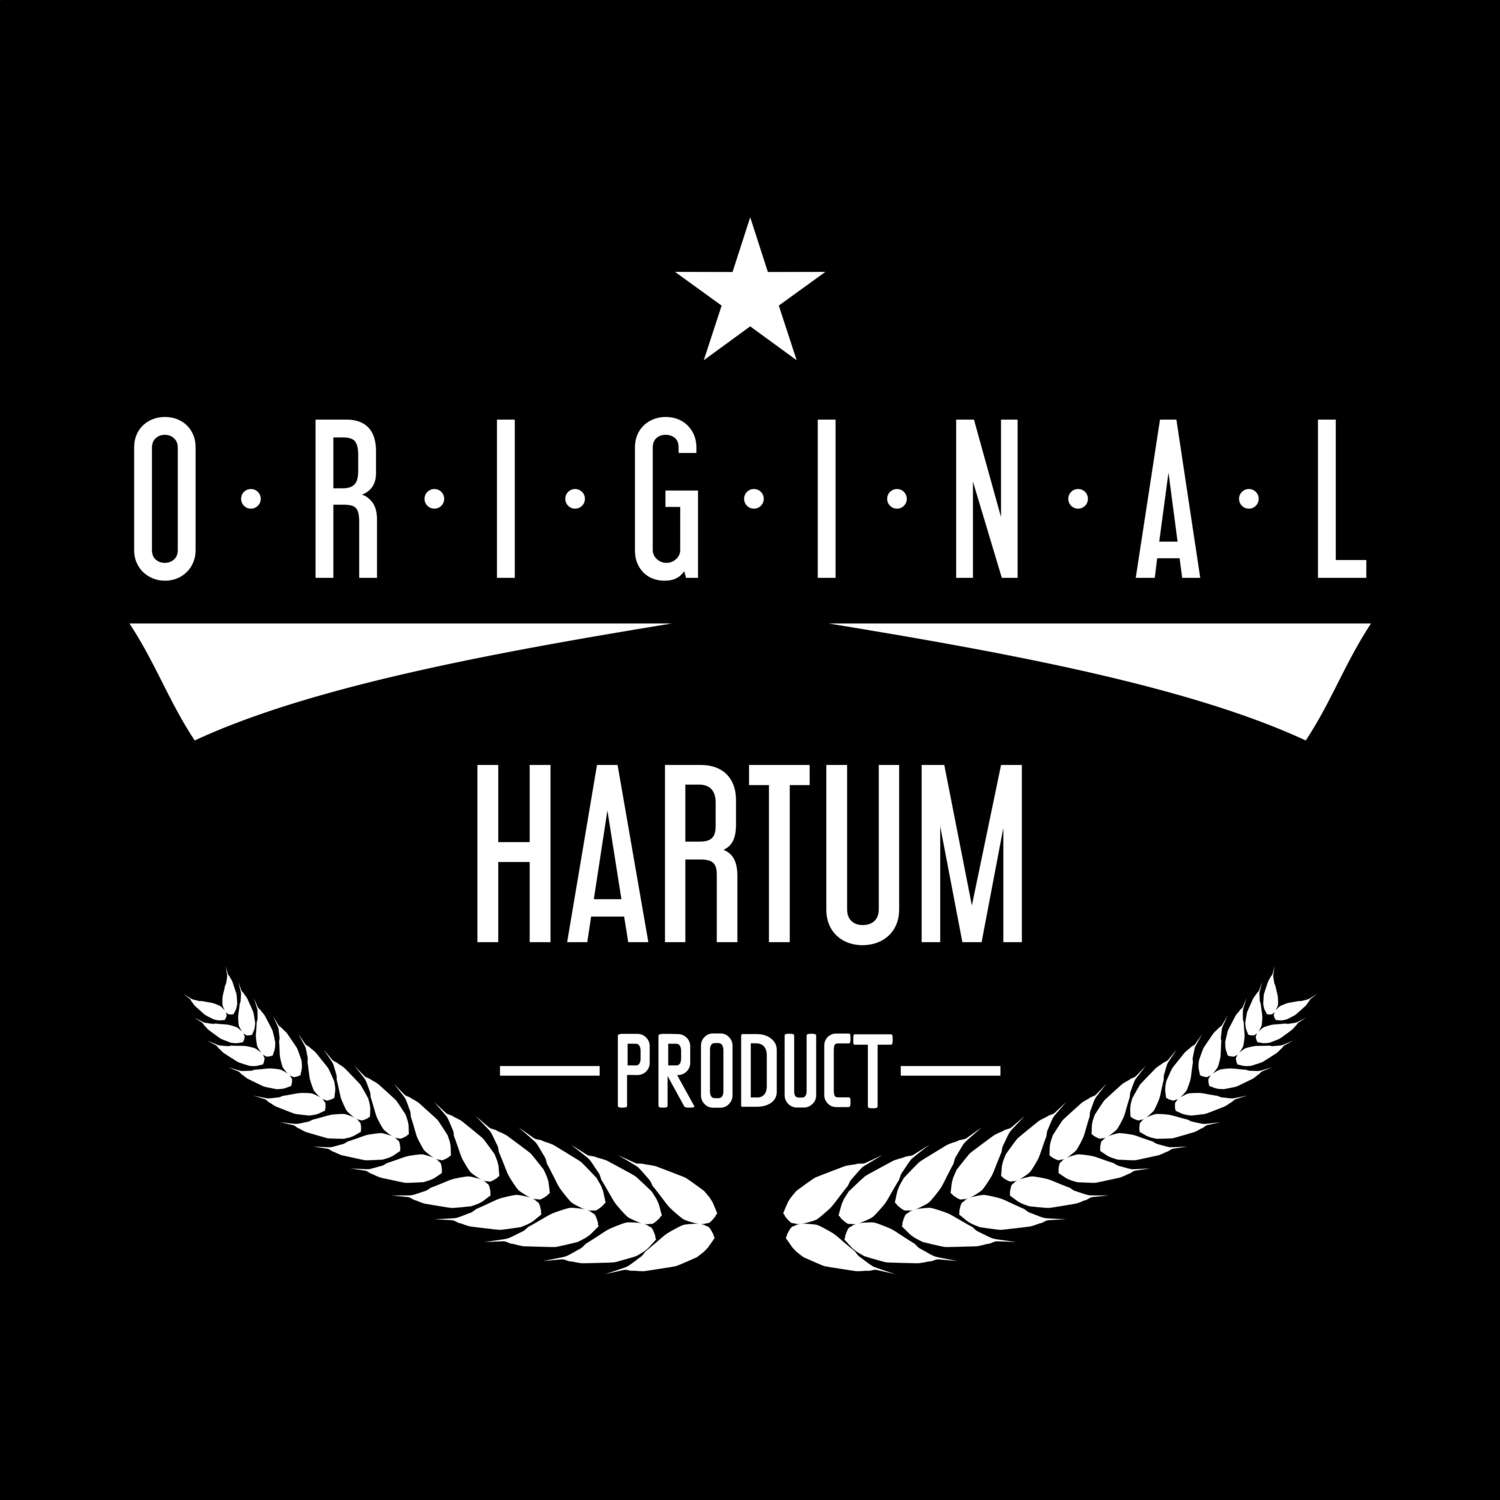 Hartum T-Shirt »Original Product«